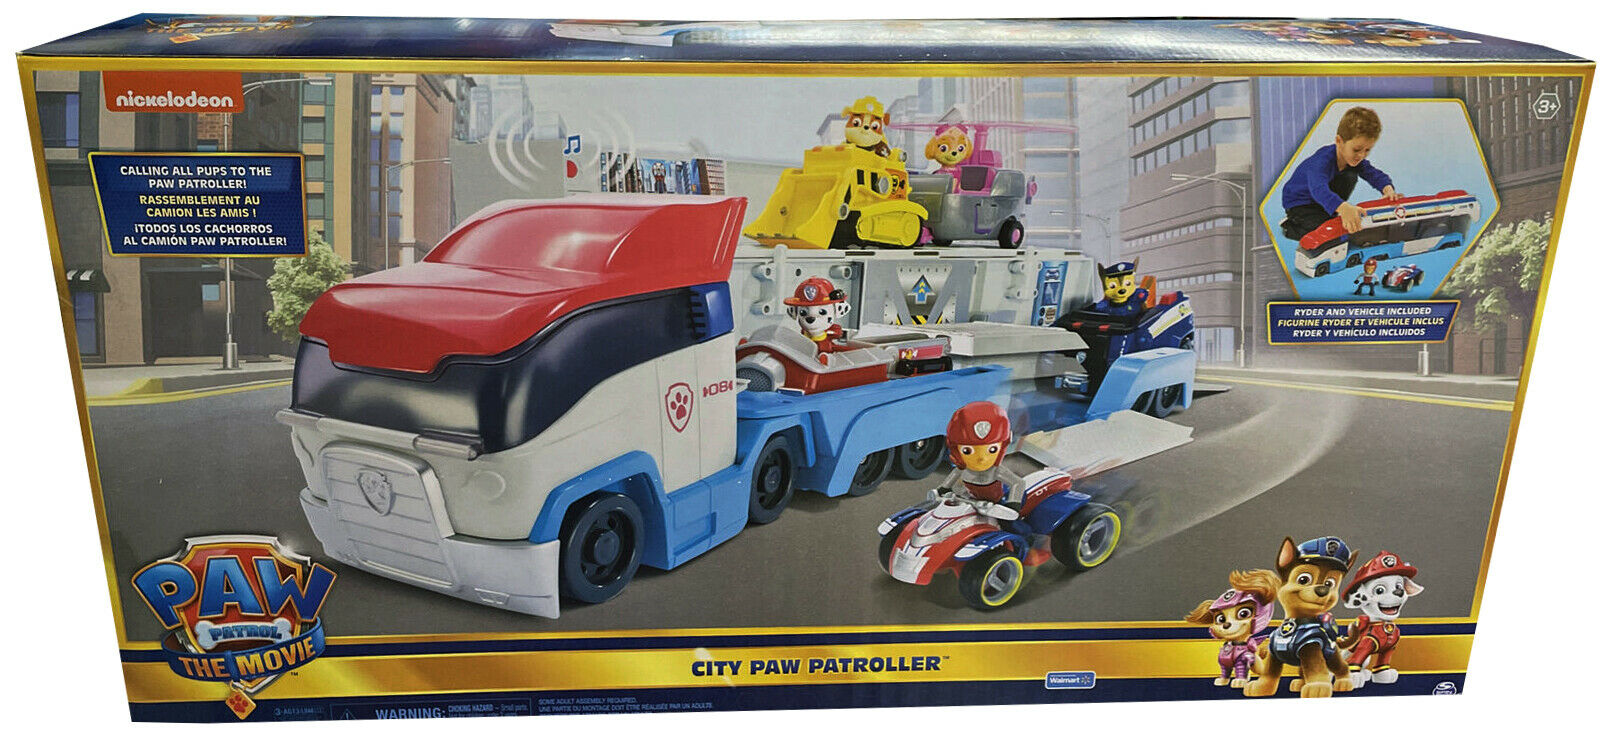 Paw Patrol  Movie Transforming City Paw Patroller Play Vehicle Set